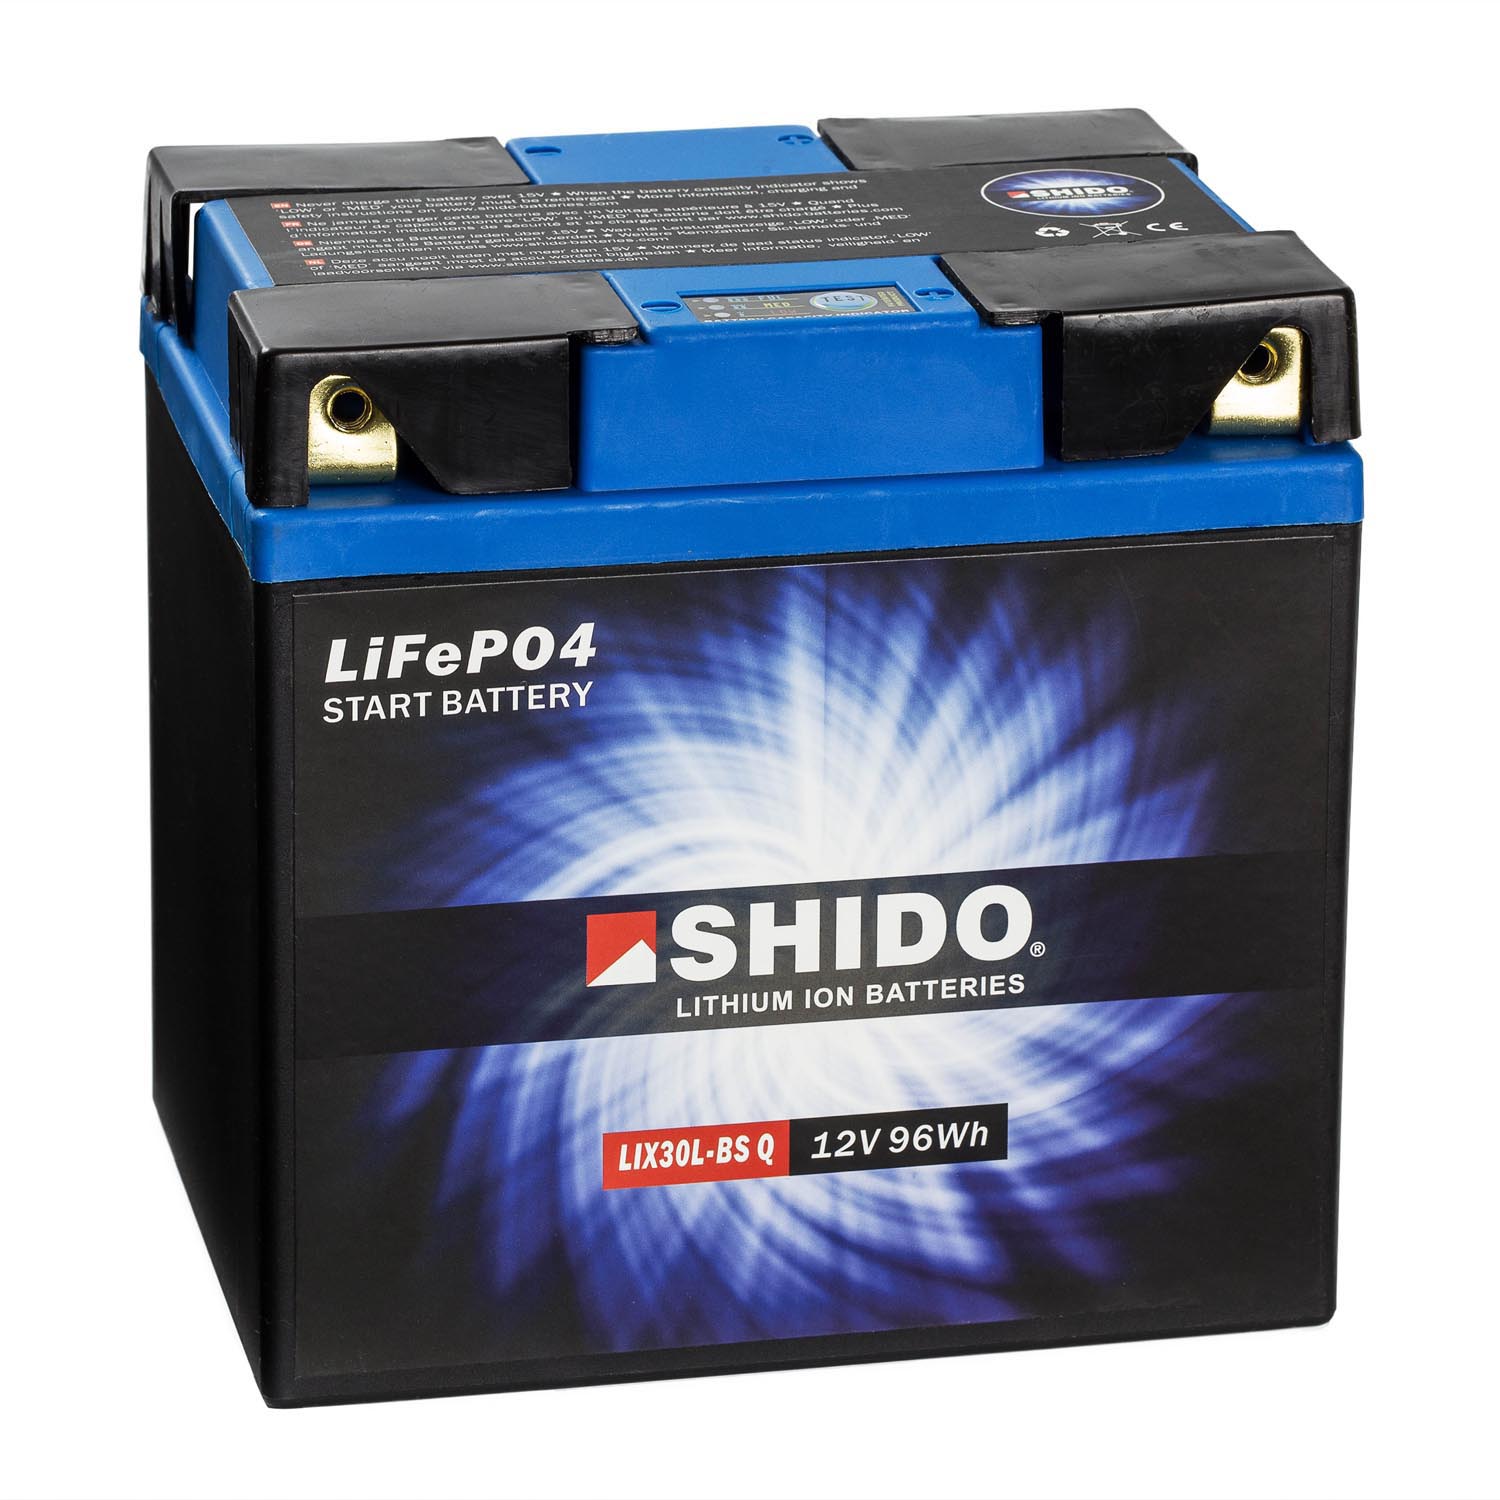 Shido Lithium Motorradbatterie LiFePO4 LIX30L-BS Q 12V